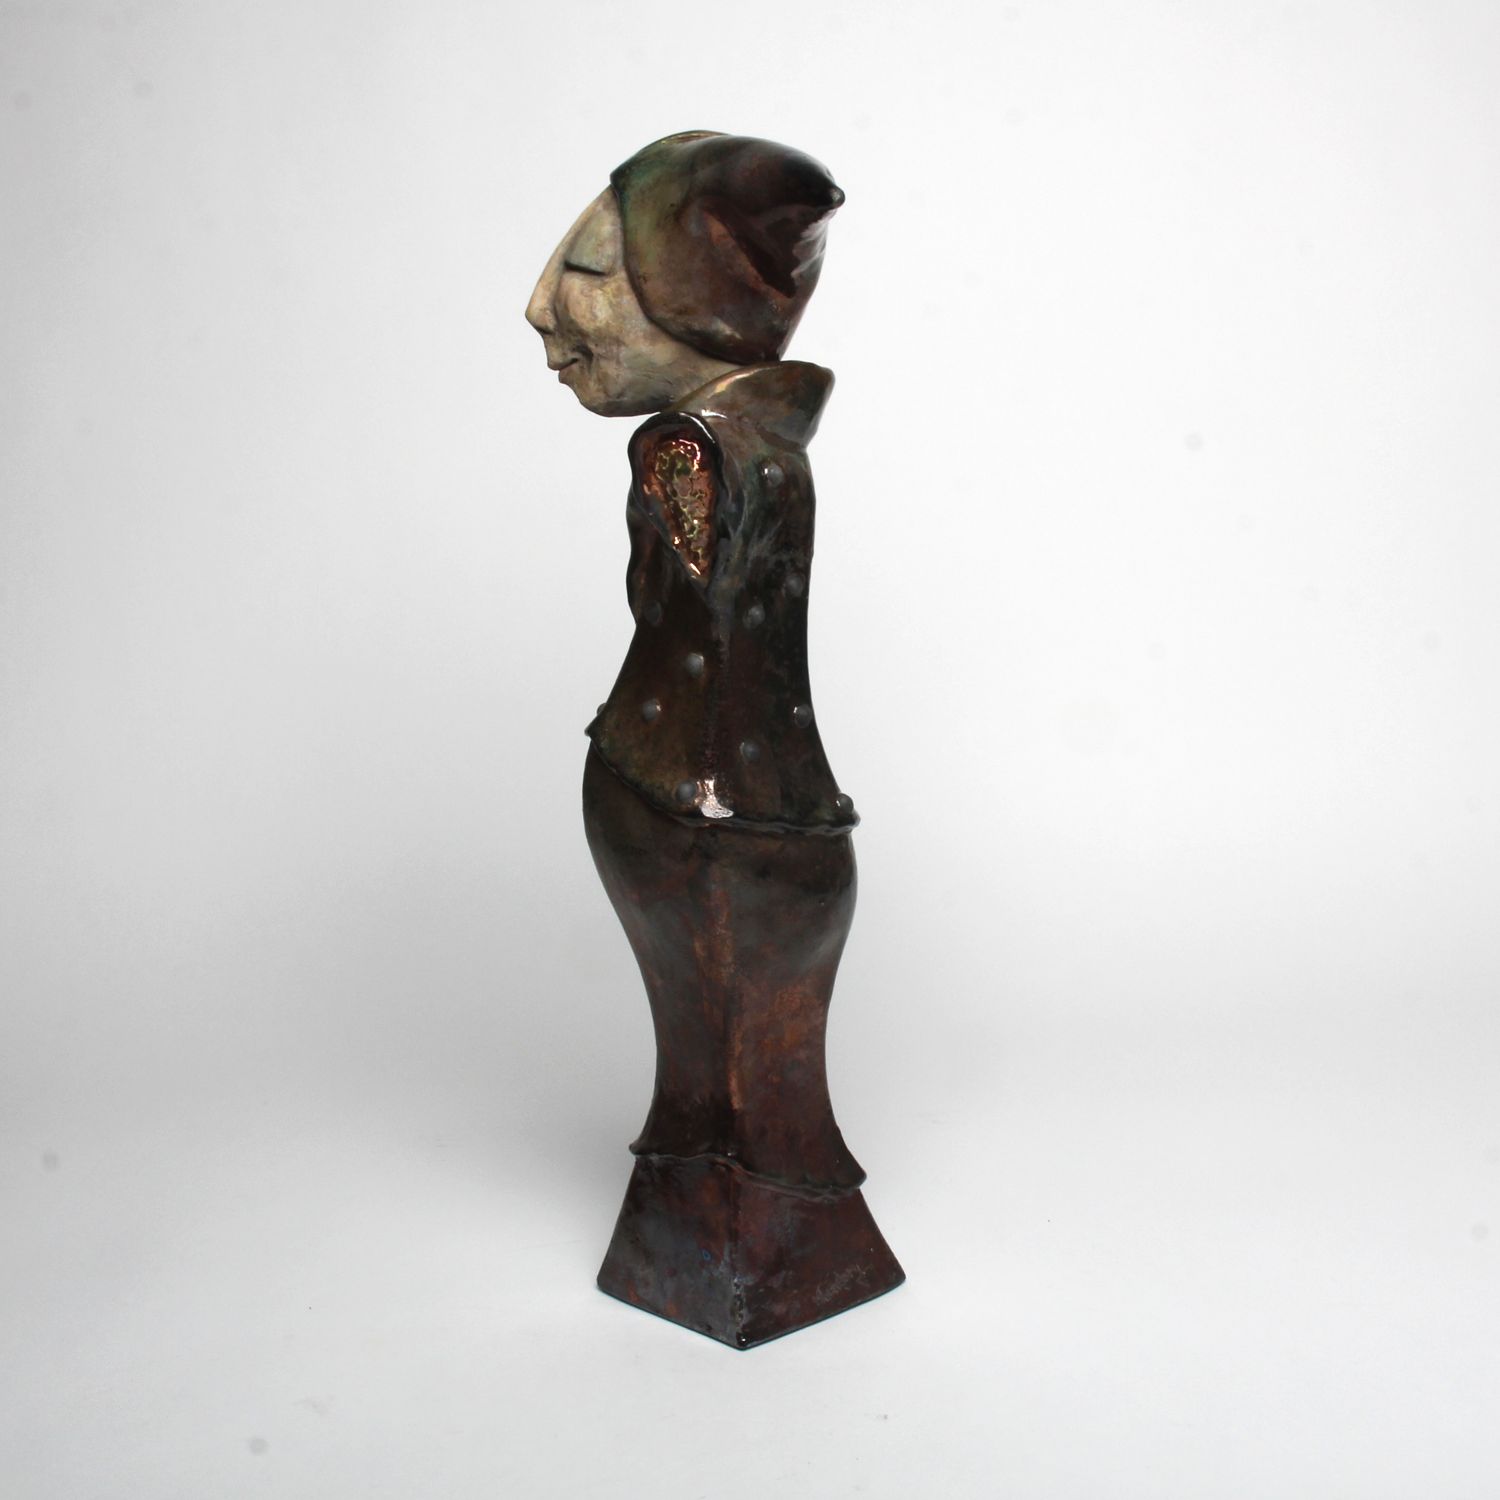 Zsuzsa Monostory: Tall Jester Figure Product Image 2 of 4